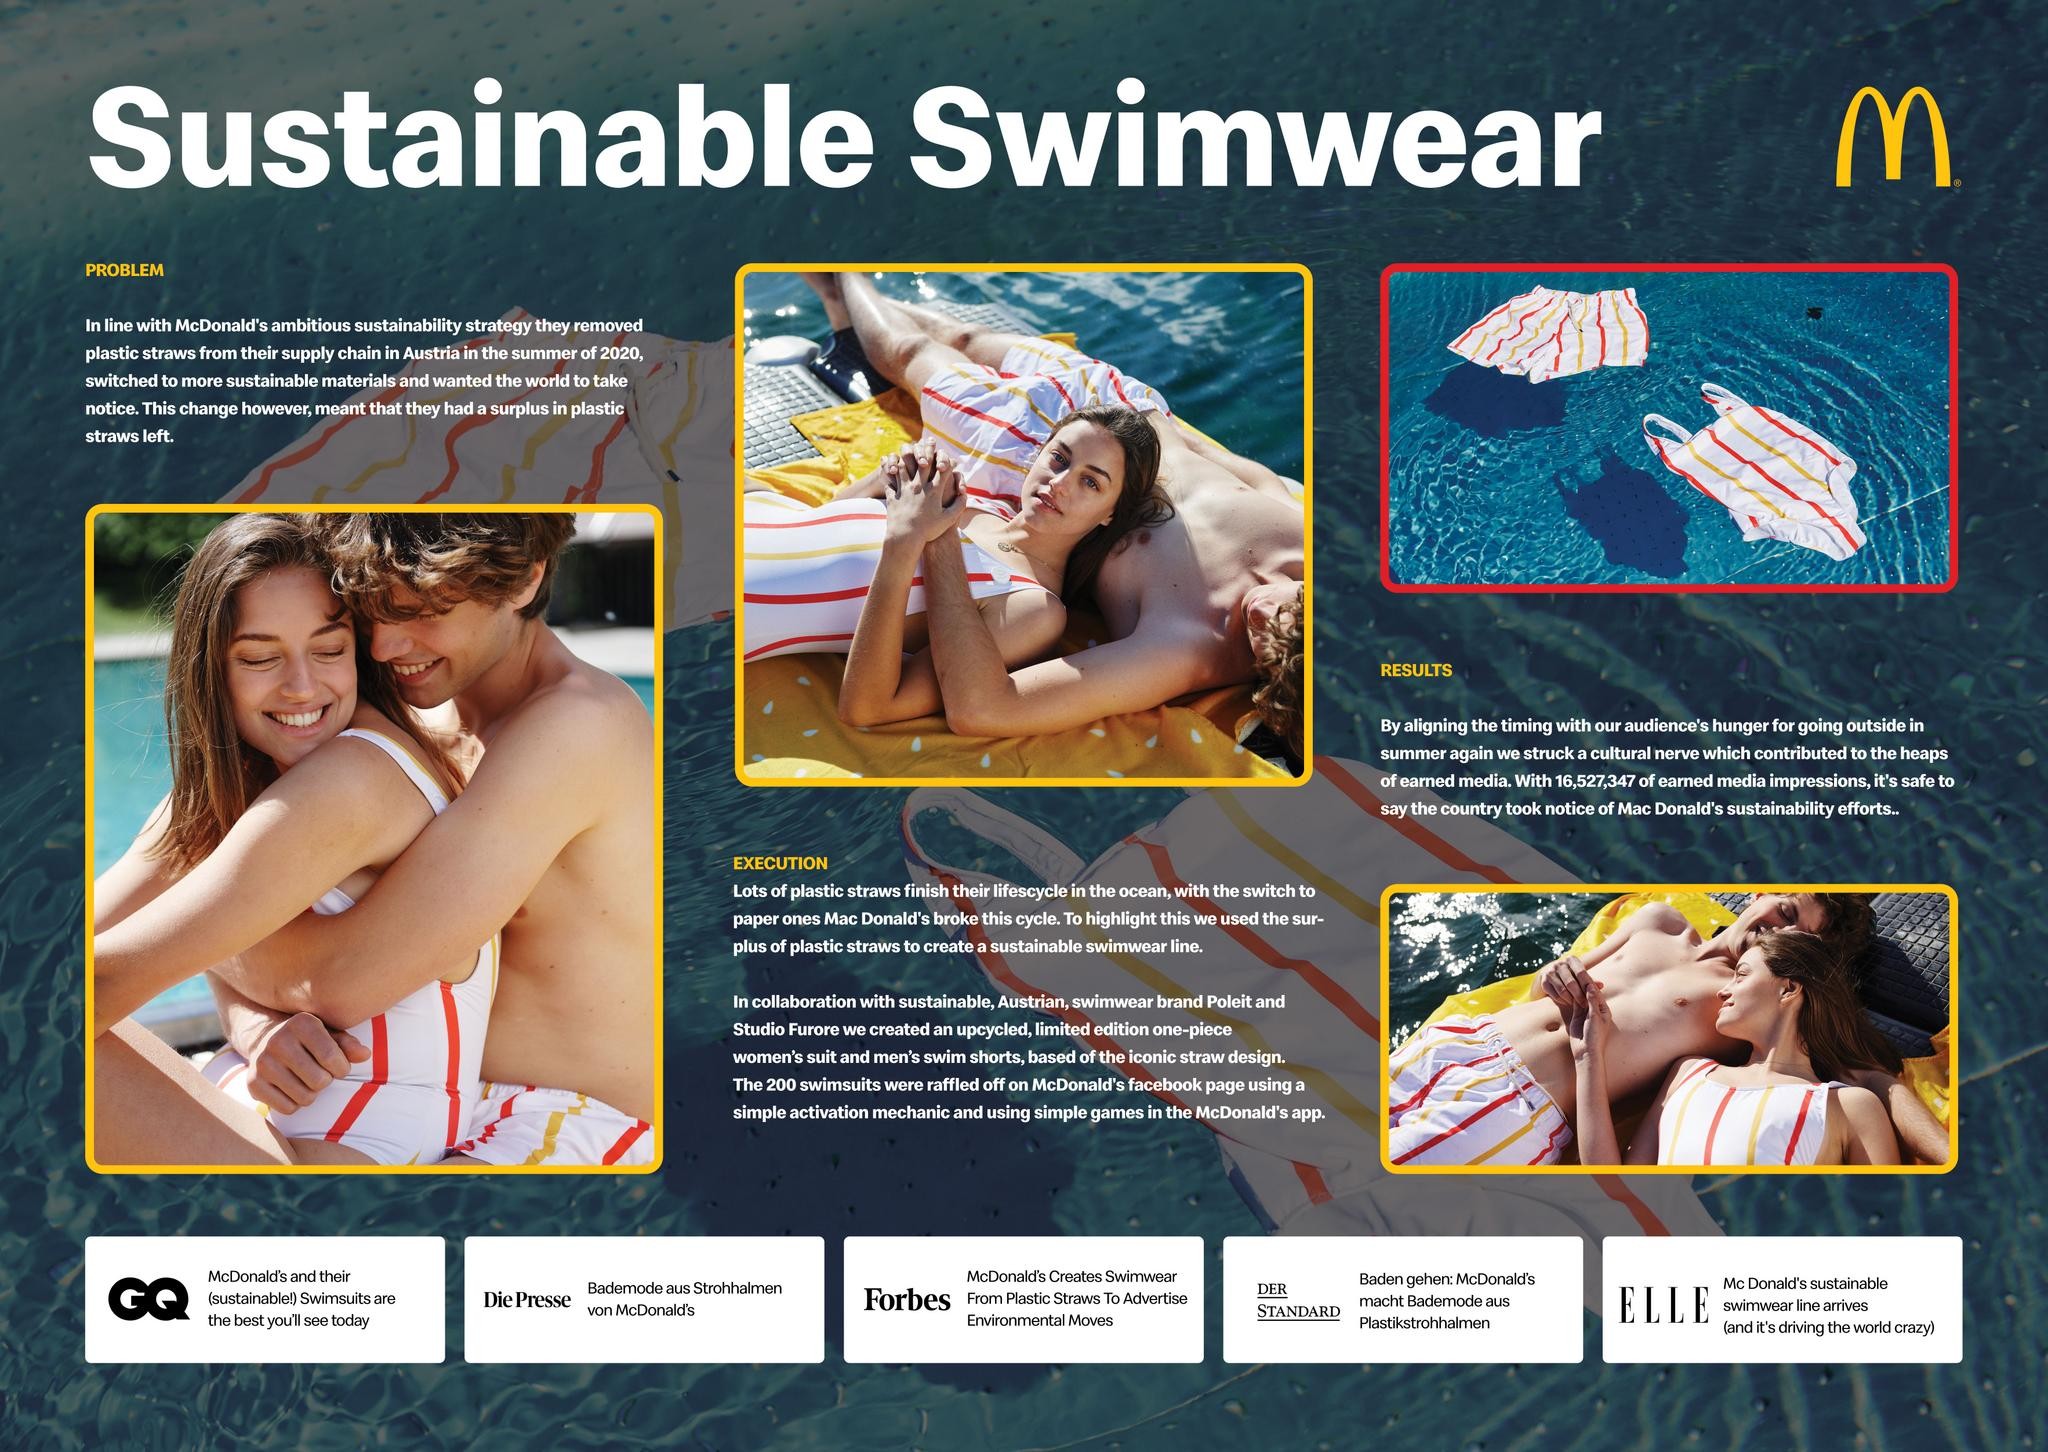 McDonald's Sustainable Swimsuits